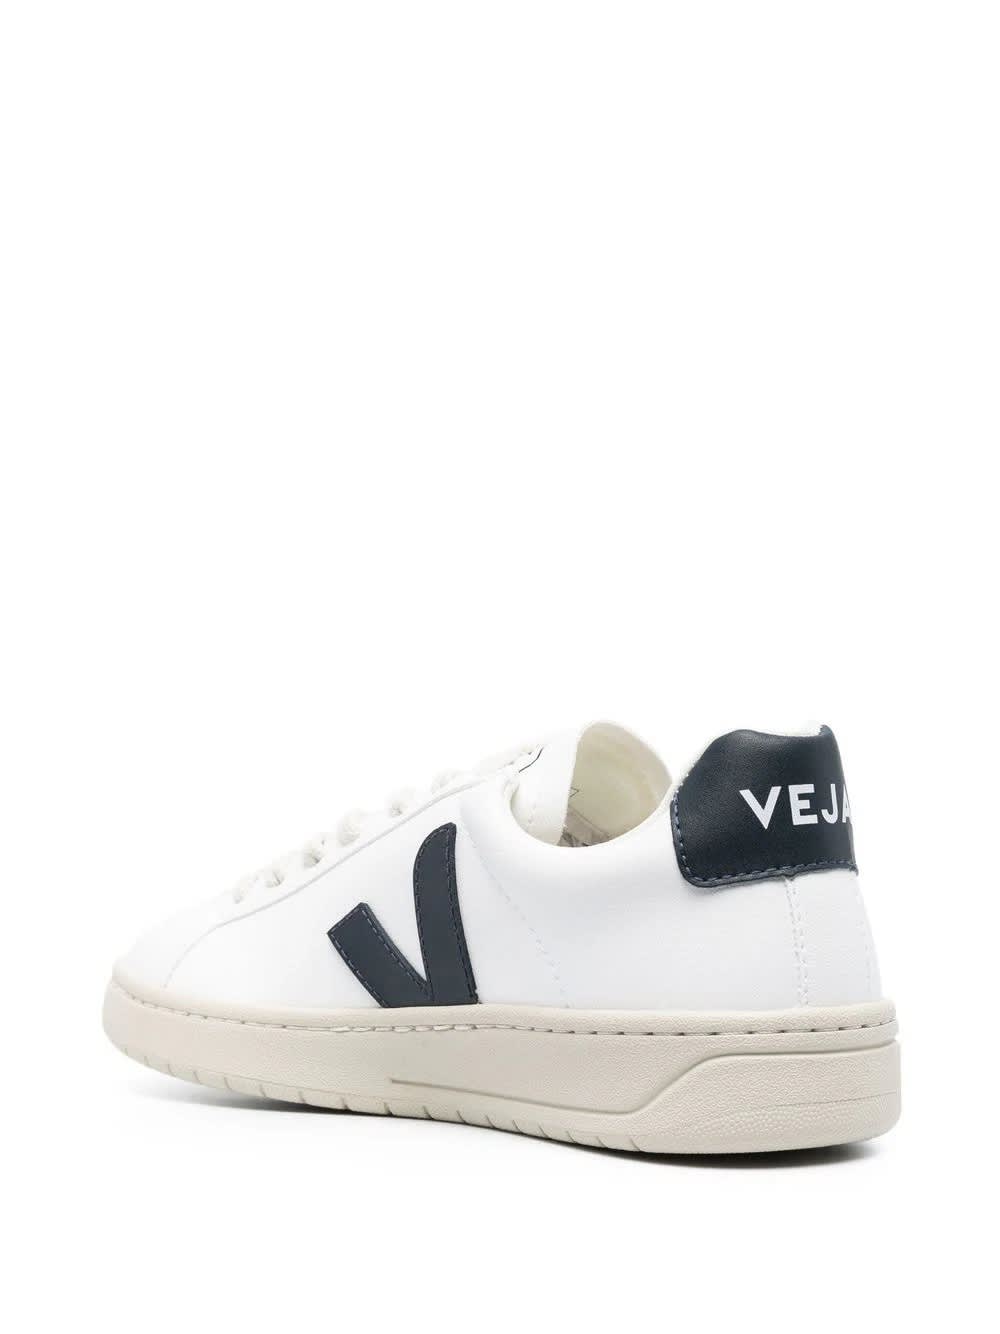 Shop Veja Urca Cwl Sneakers In White/navy Blue